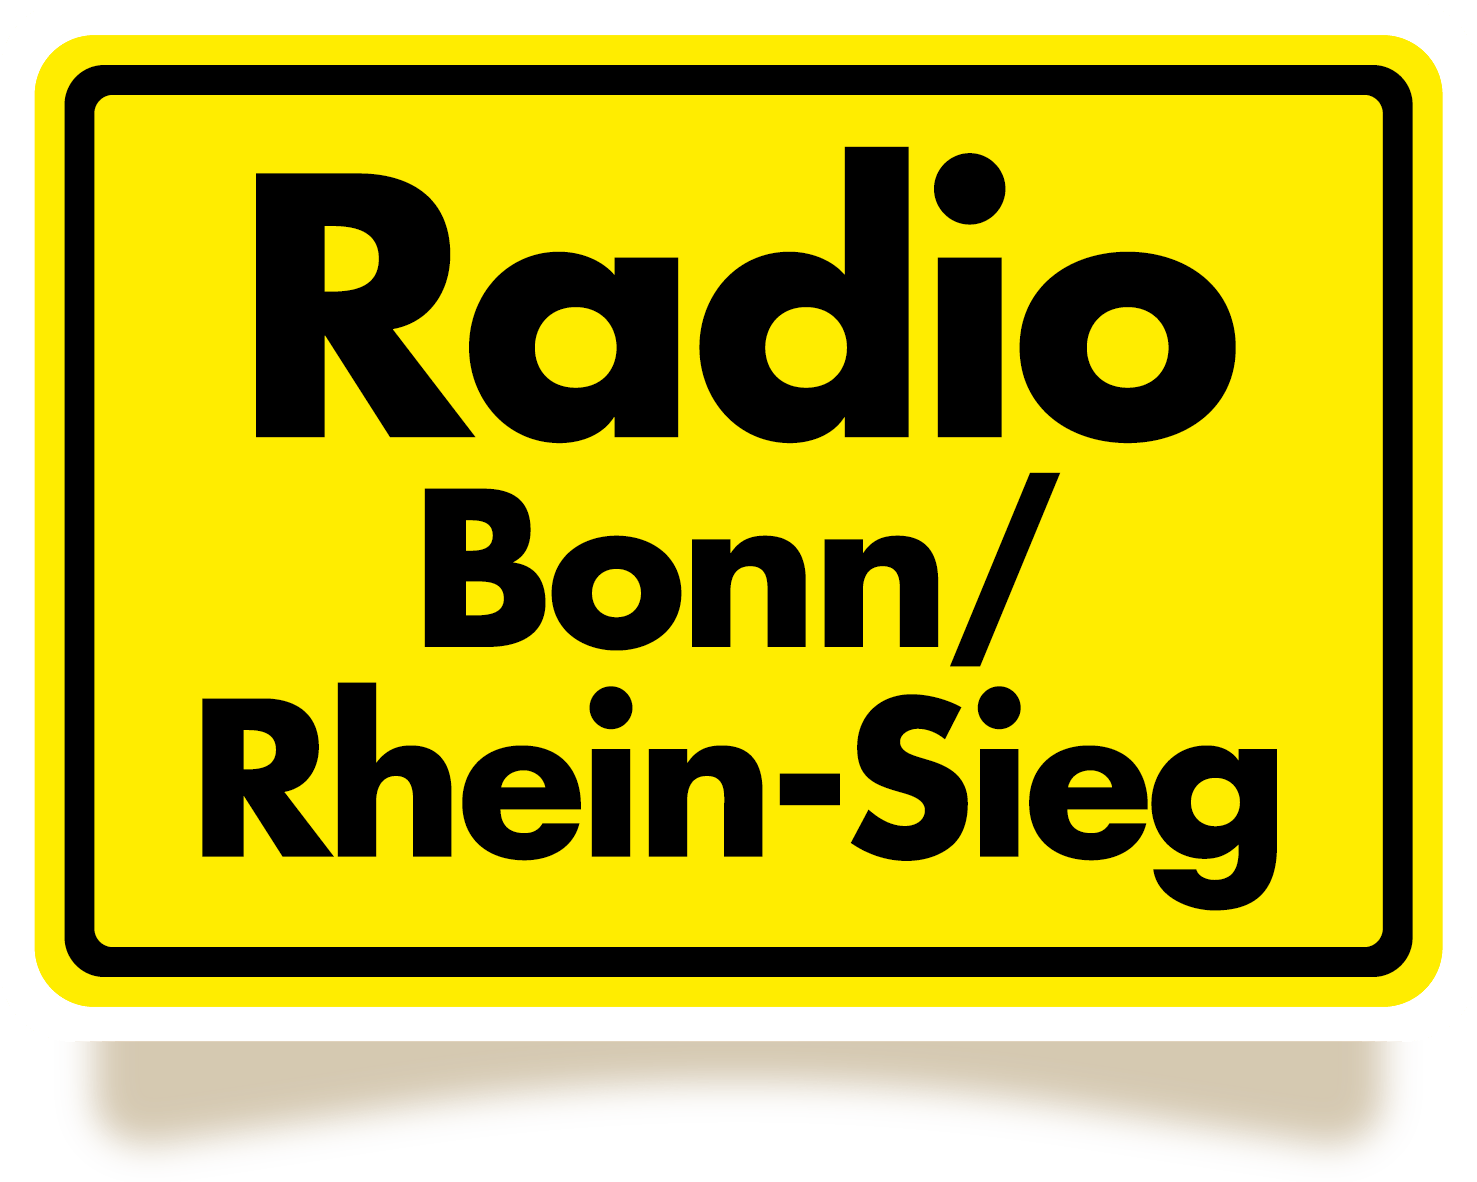 RBRS Radio